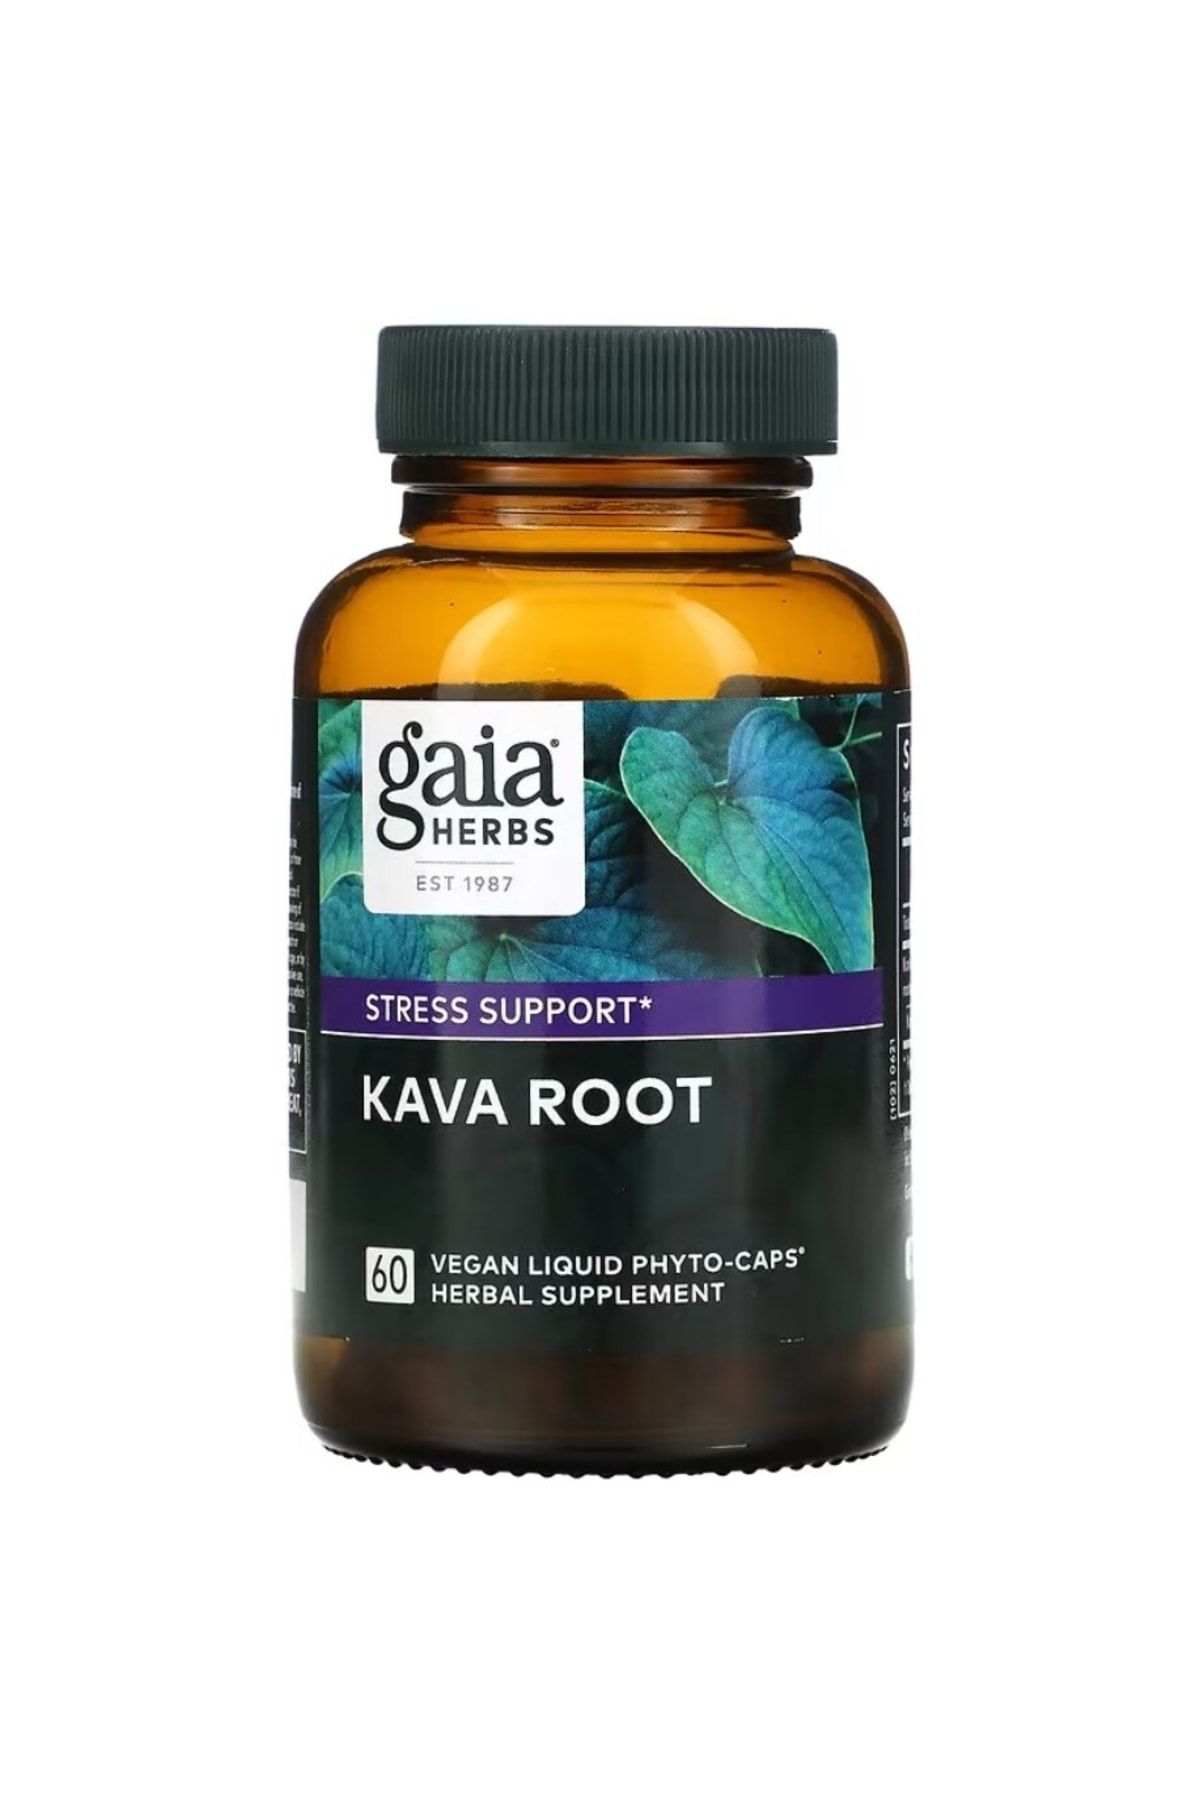 Life Gaia Herbs, Kava Root, 60 Vegan Liquid Phyto-caps